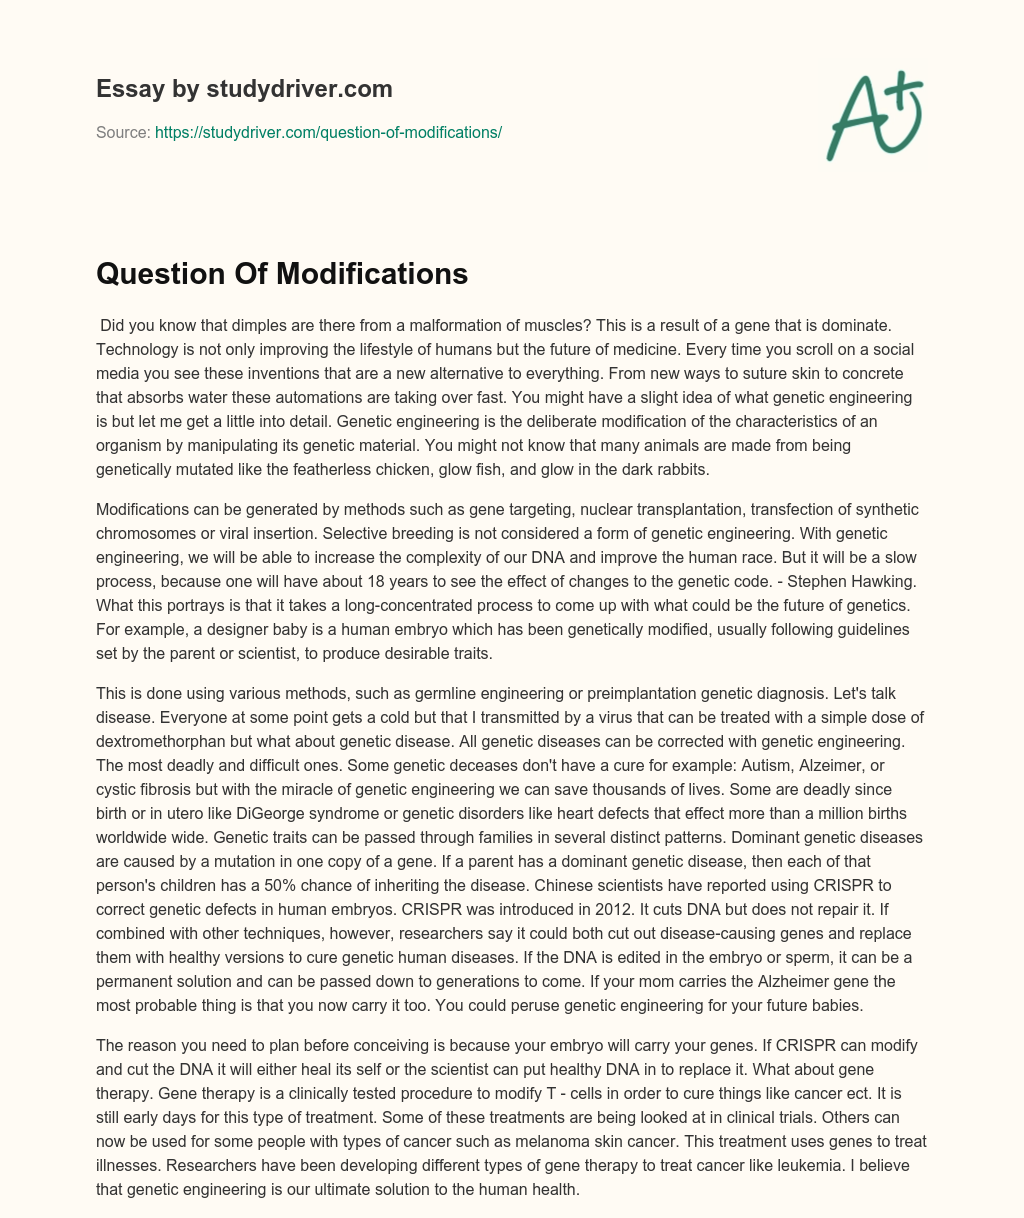 Question of Modifications essay